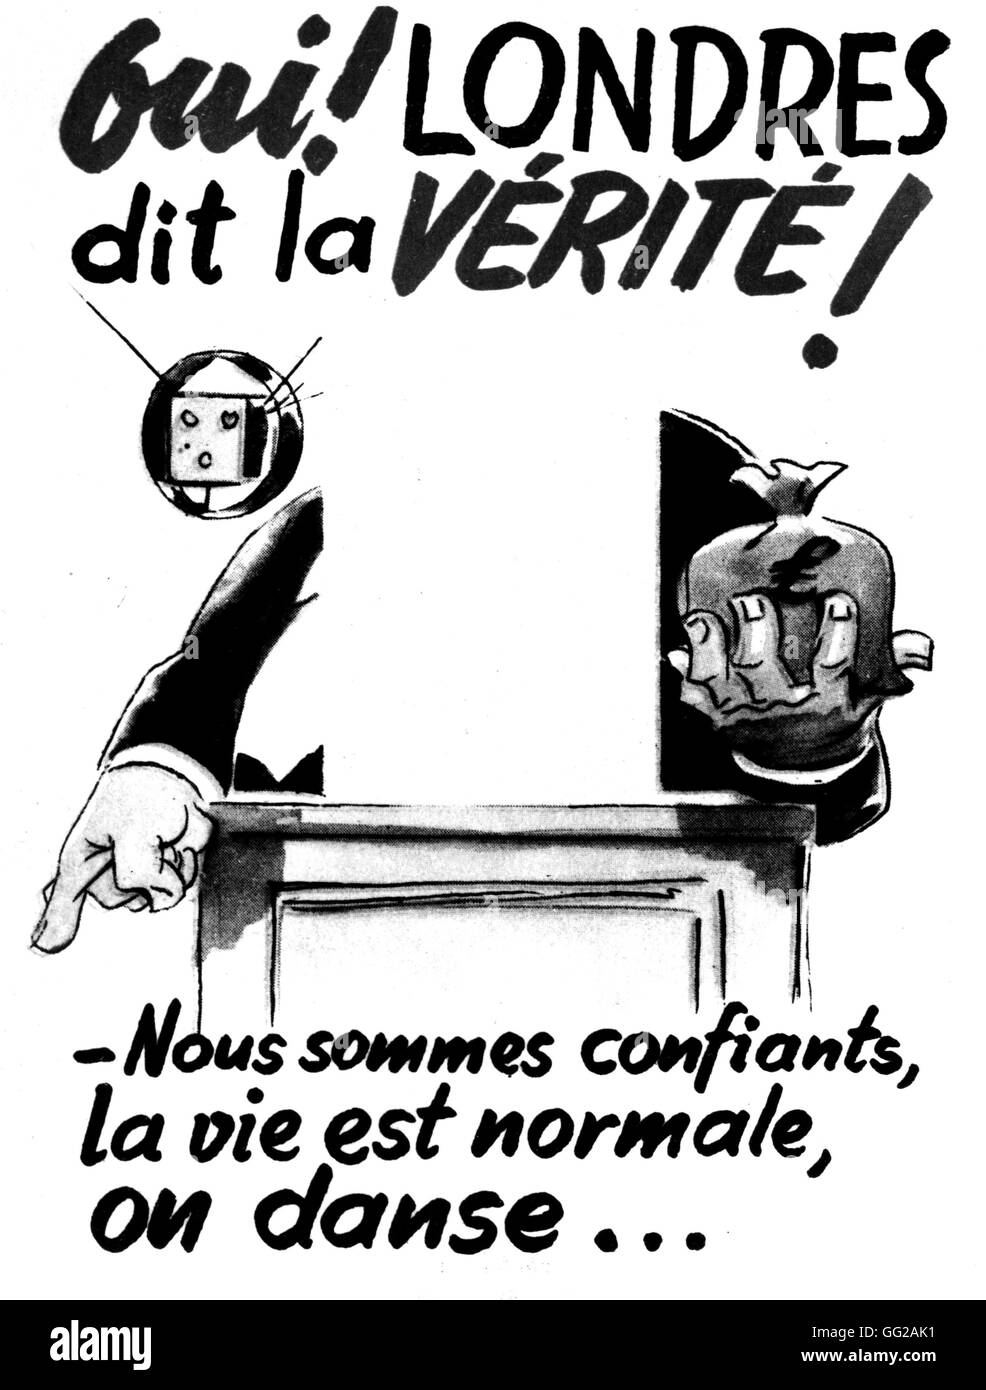 Propaganda against London radio broadcasting 1940 France - World War II City of Paris Library Stock Photo